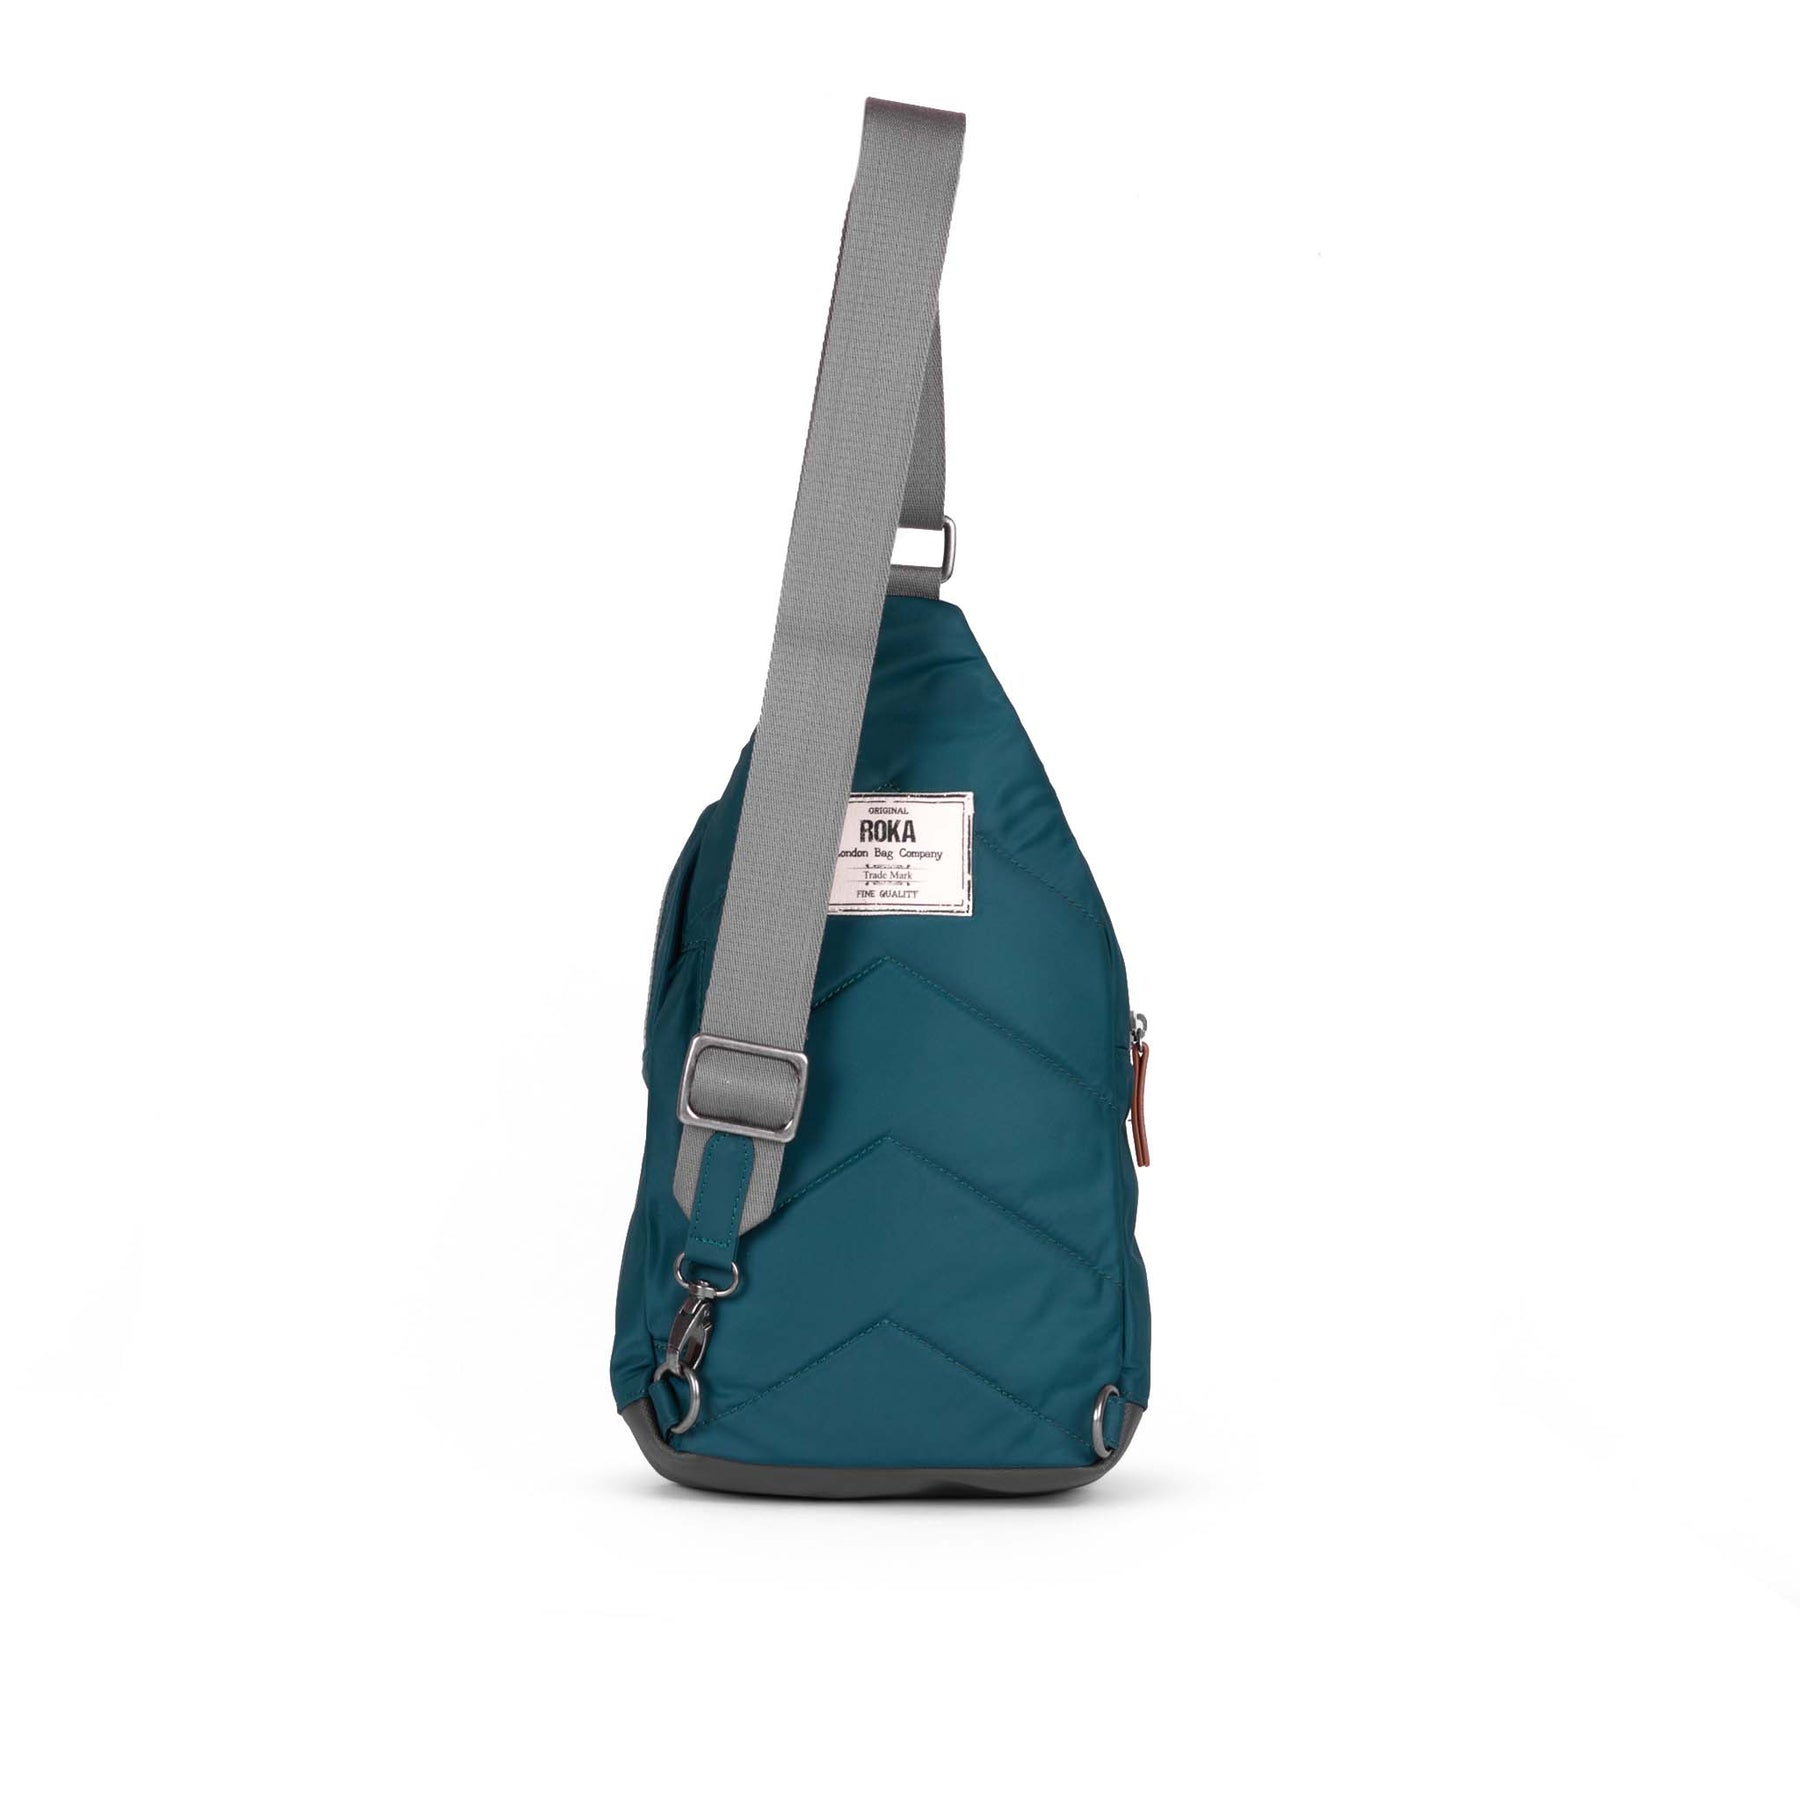 Willesden B Teal | Recycled & Eco-Friendly Crossbody Bag | ROKA London